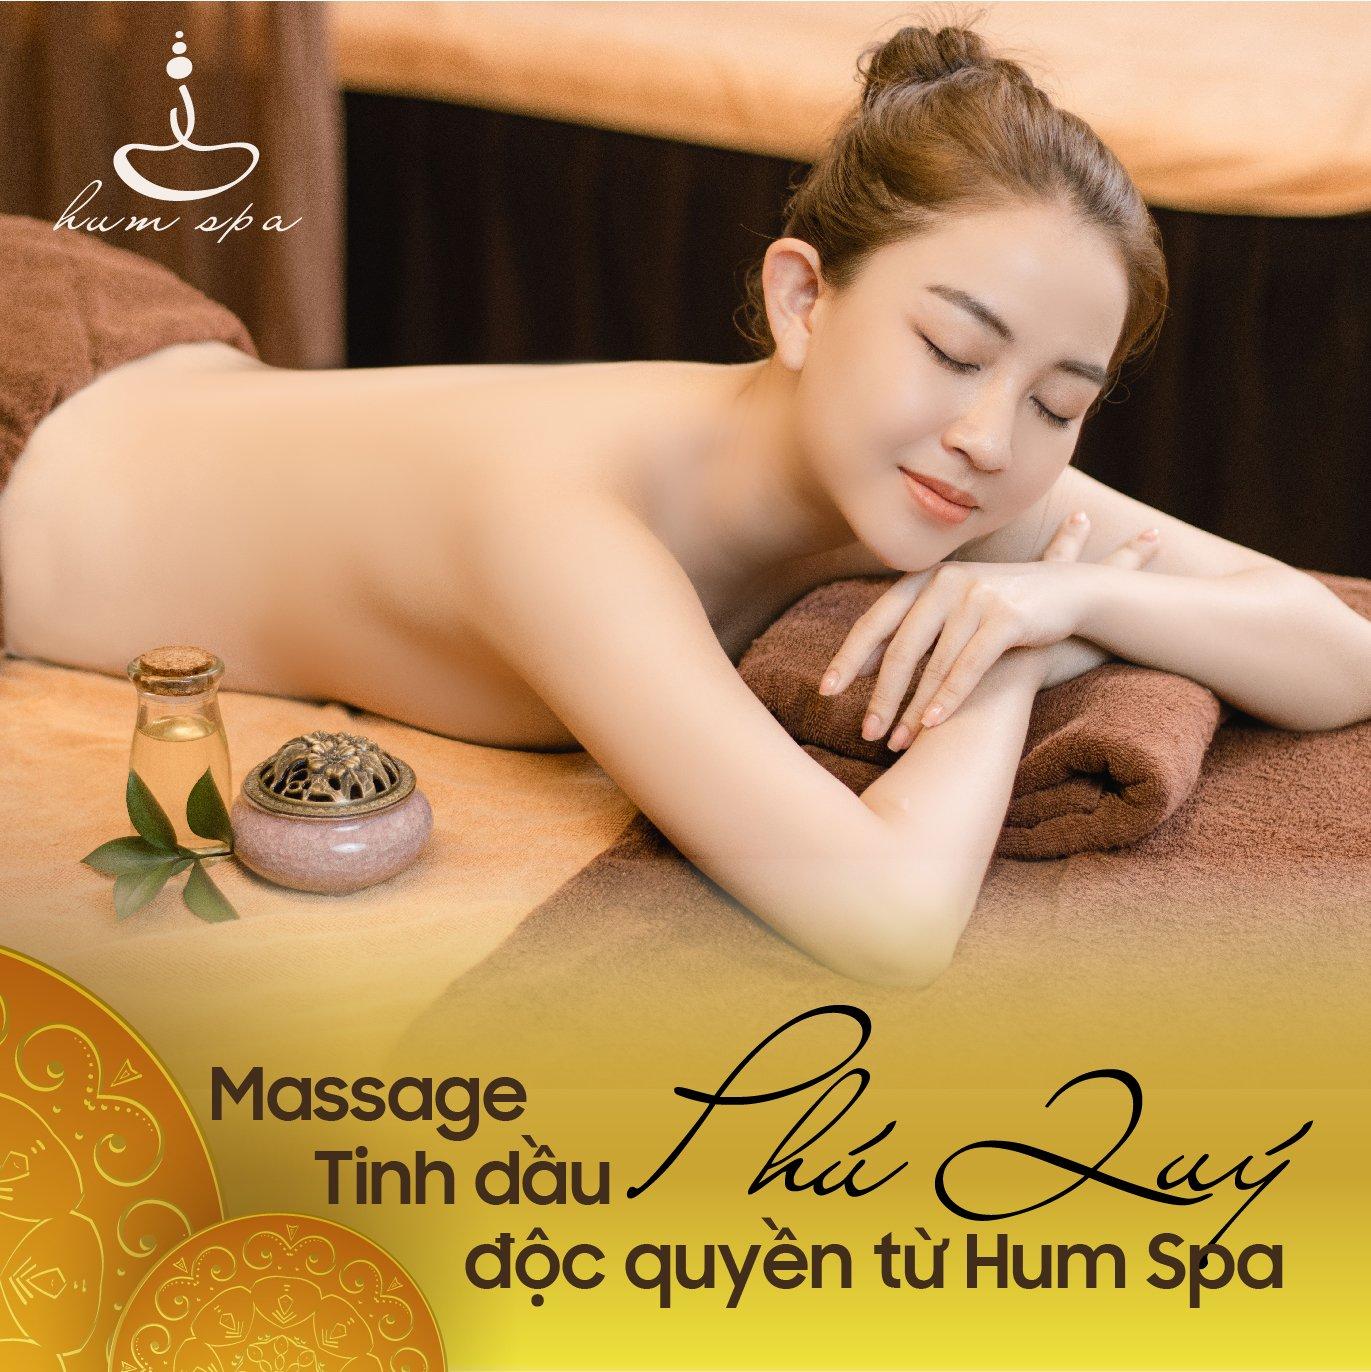 Massage-Tinh-D au-Phu-Quy-Hum -Spa.jpeg